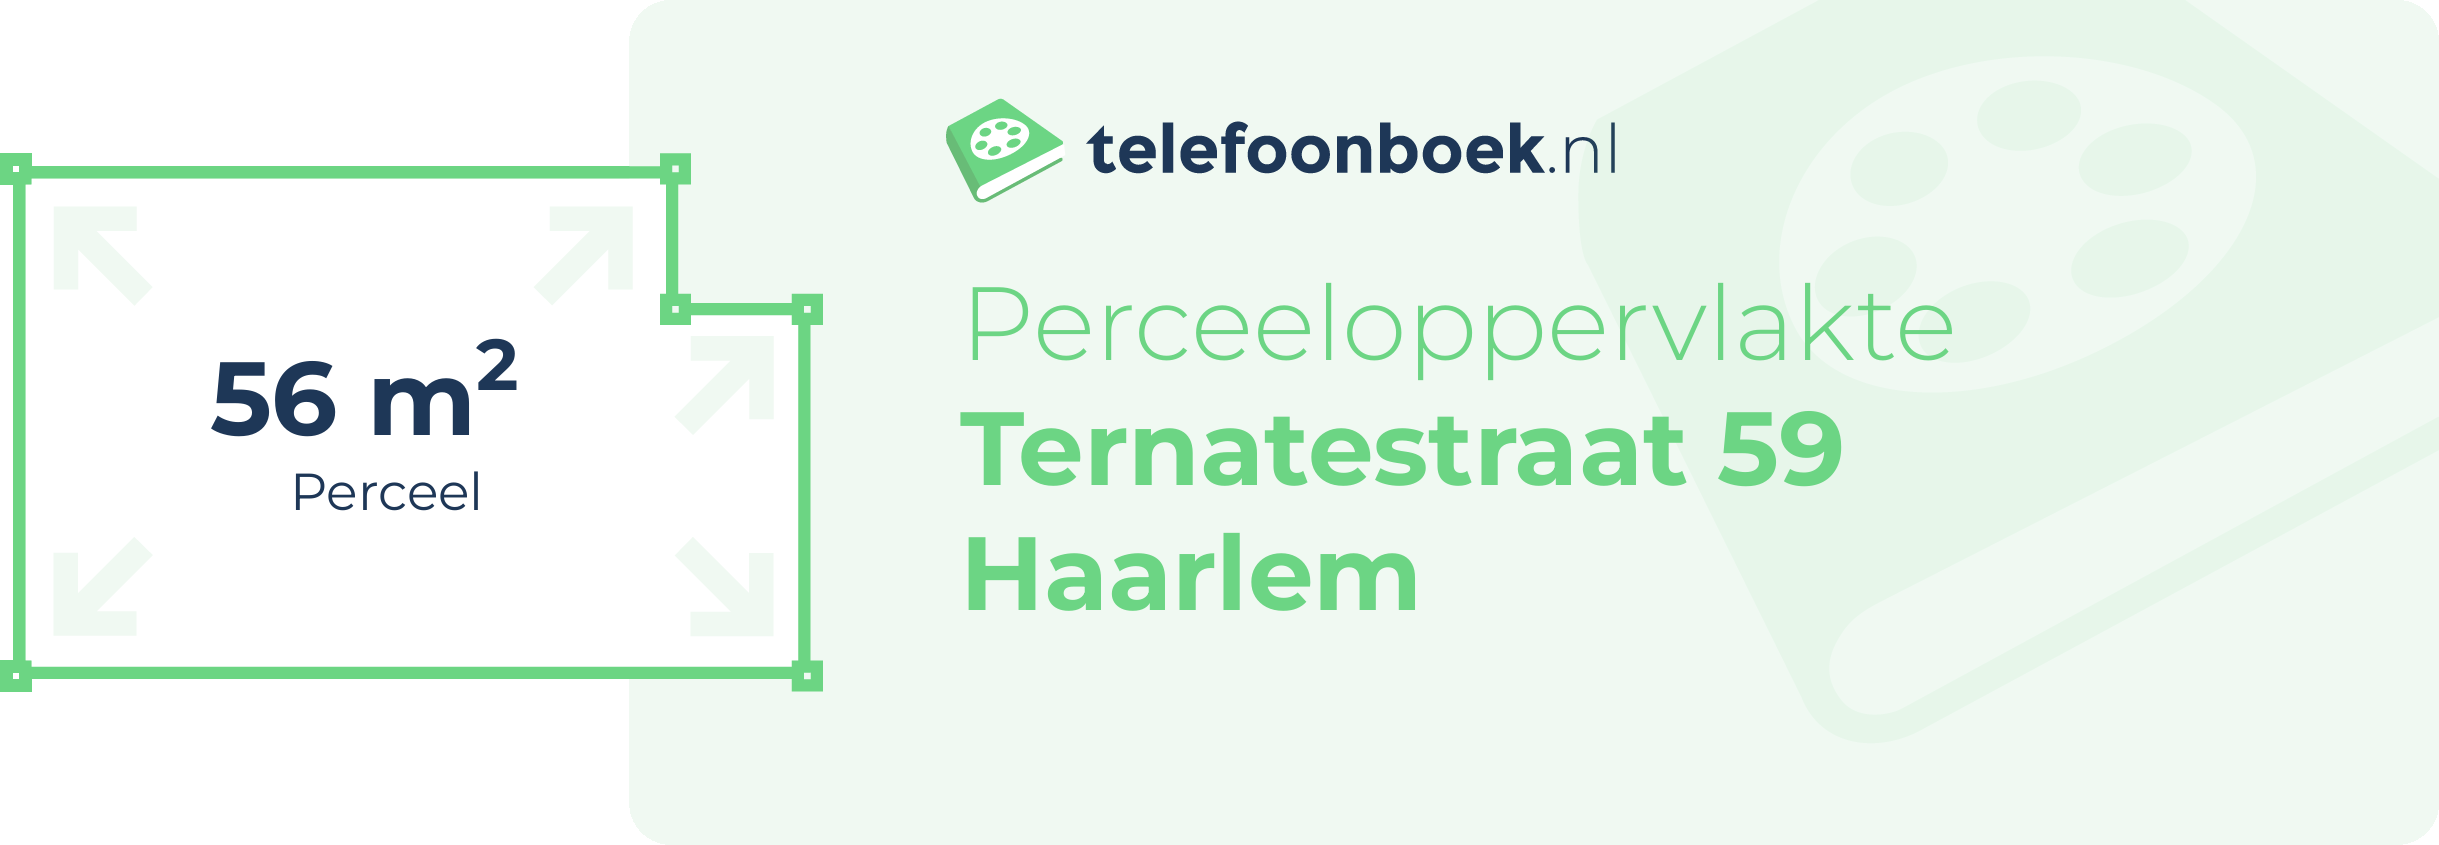 Perceeloppervlakte Ternatestraat 59 Haarlem